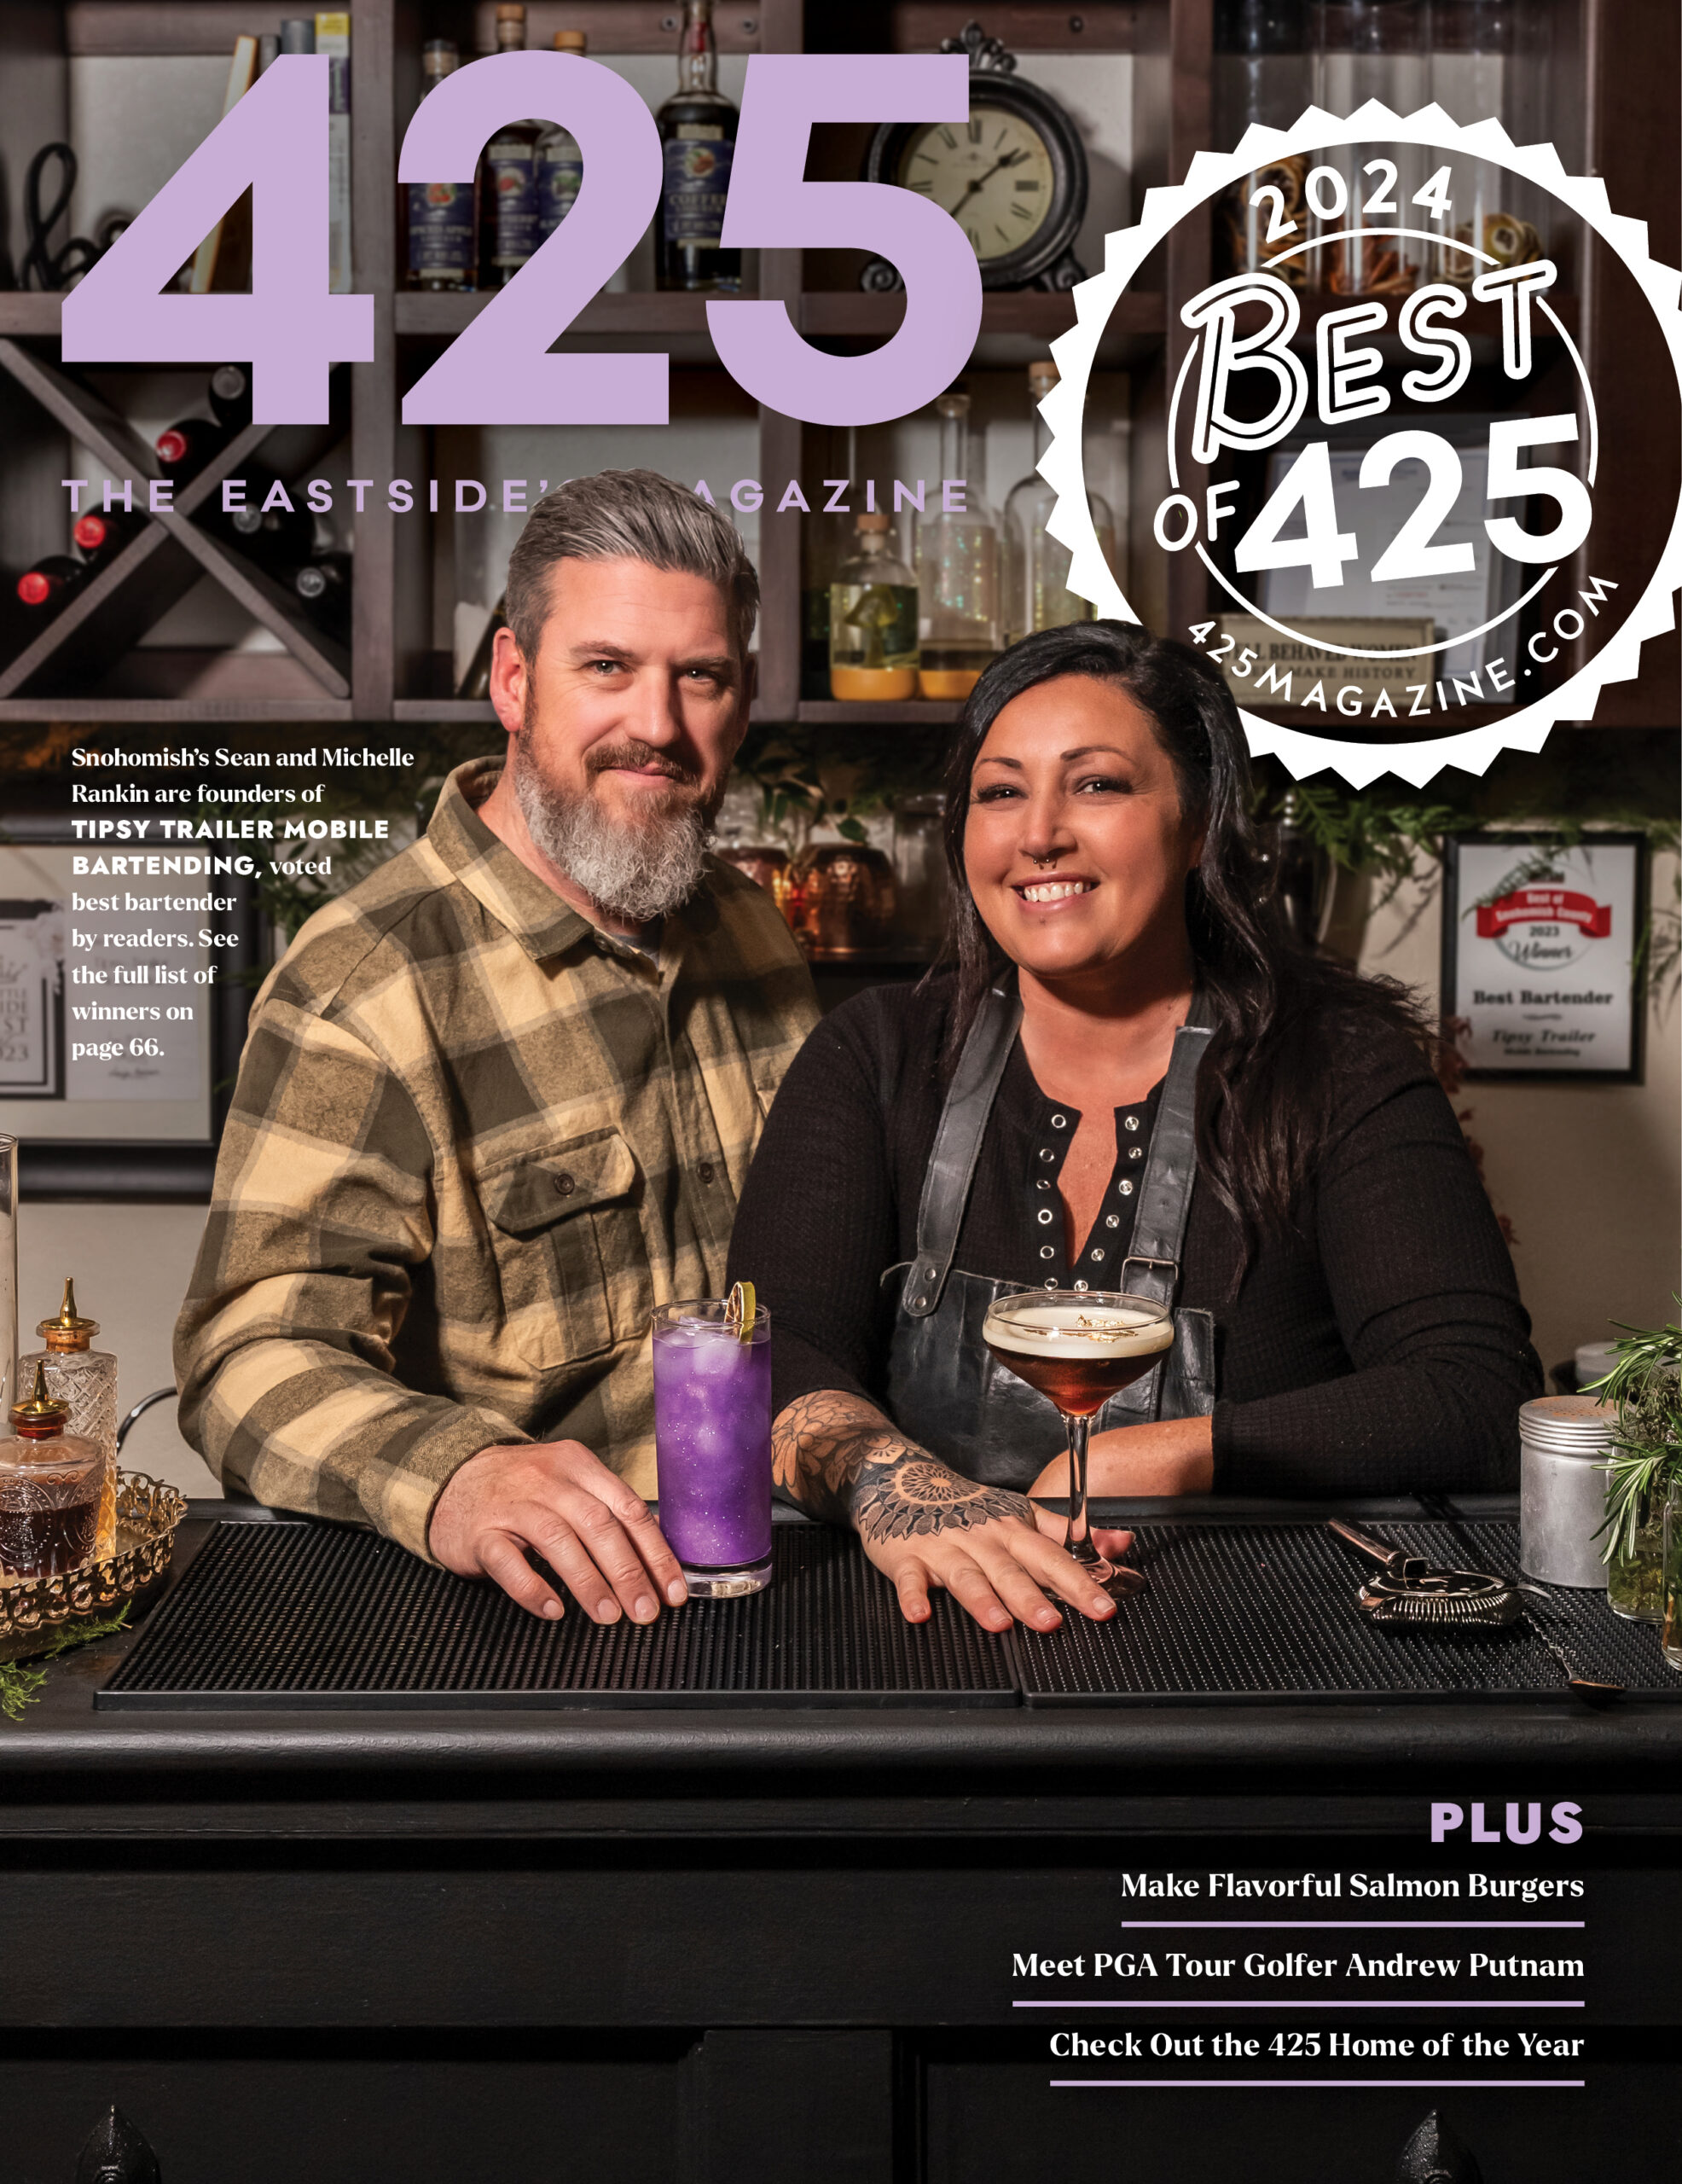 425 Magazine Cover